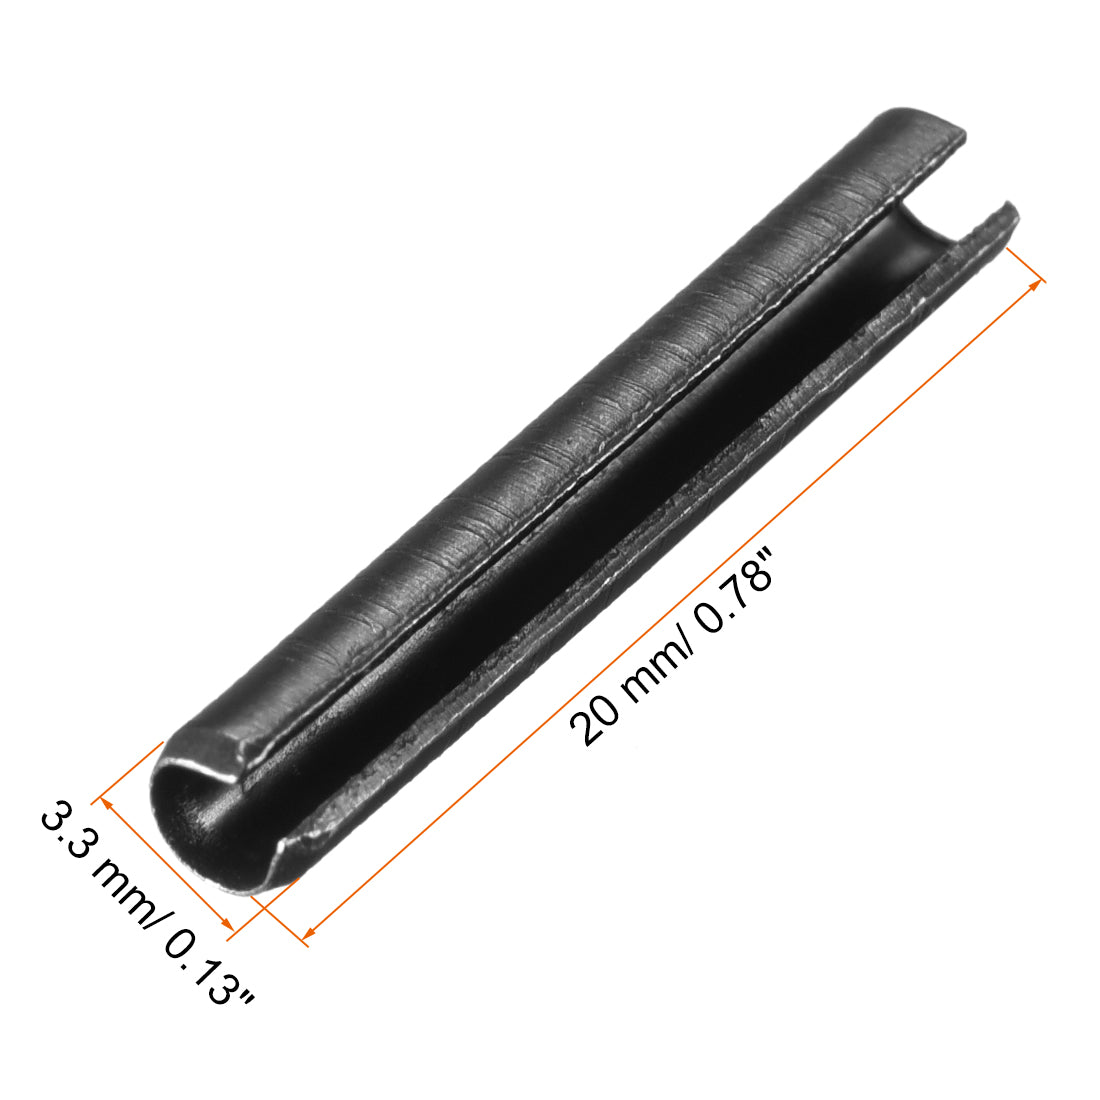 uxcell Uxcell 3.3mm x 20mm Dowel Pin Carbon Steel Split Spring Roll Shelf Support Pin Fasten Hardware Black 20 Pcs